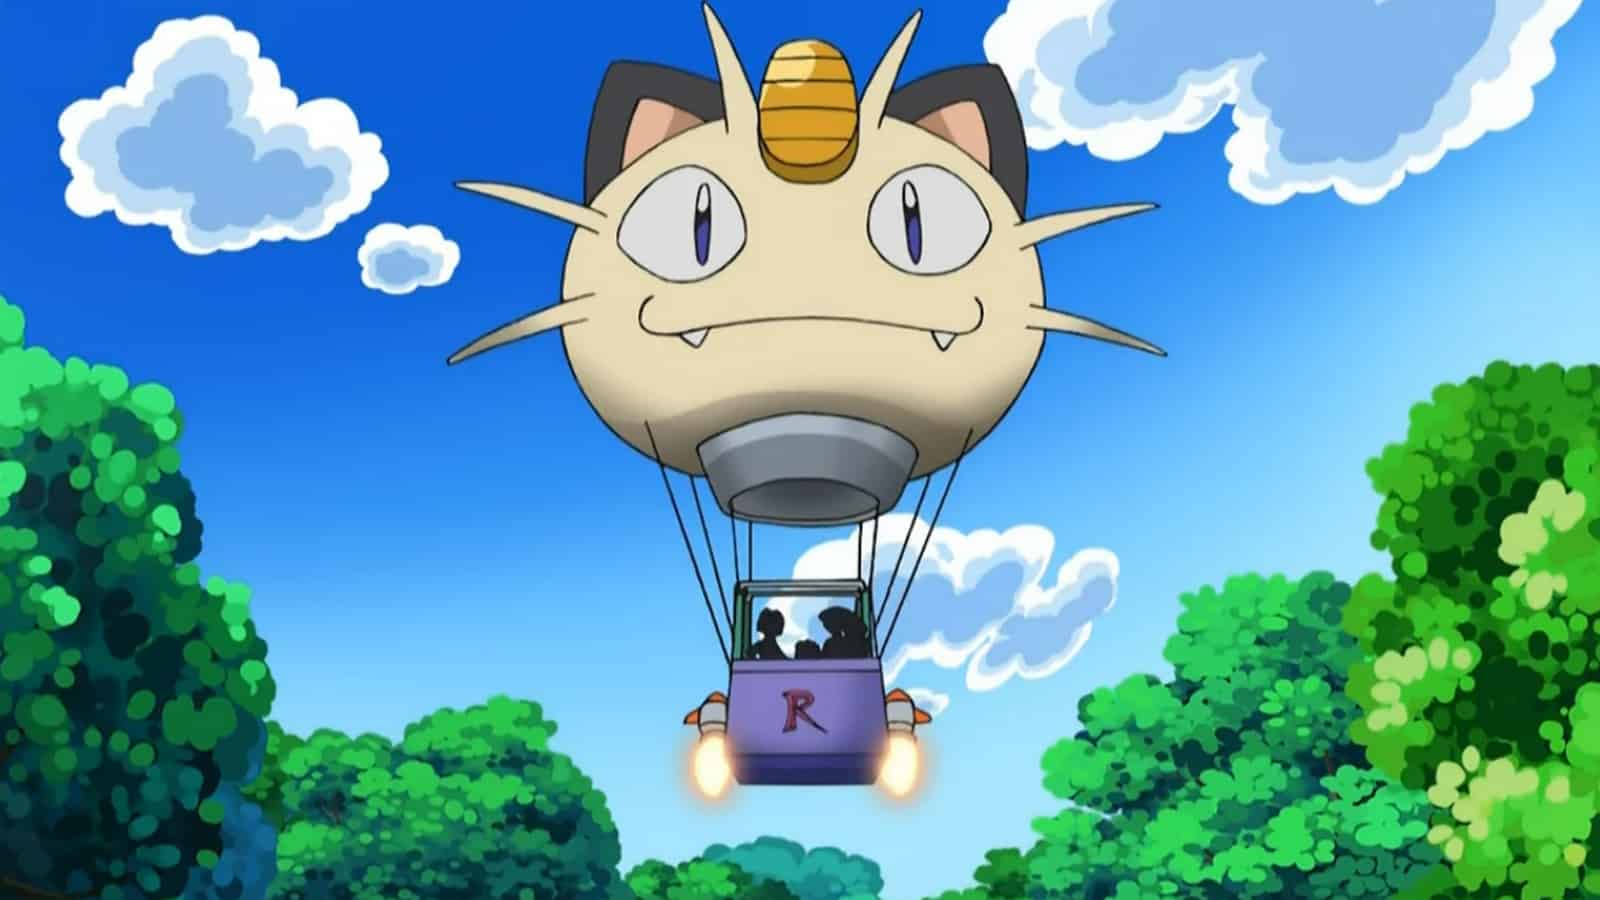 Team Rocket Meowth Balloon in Sky from Pokemon anime screenshot